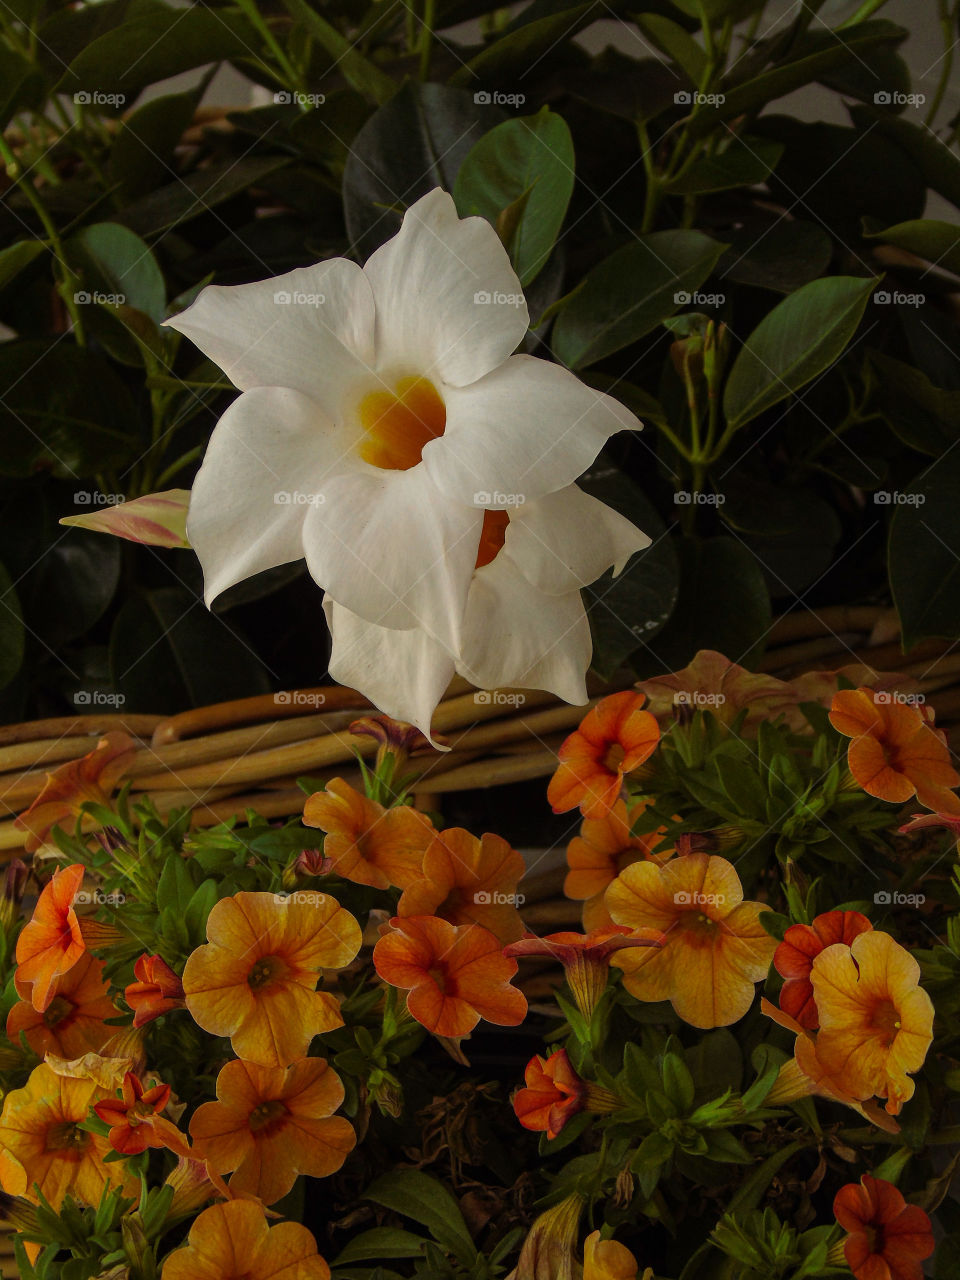 White and orange flowers